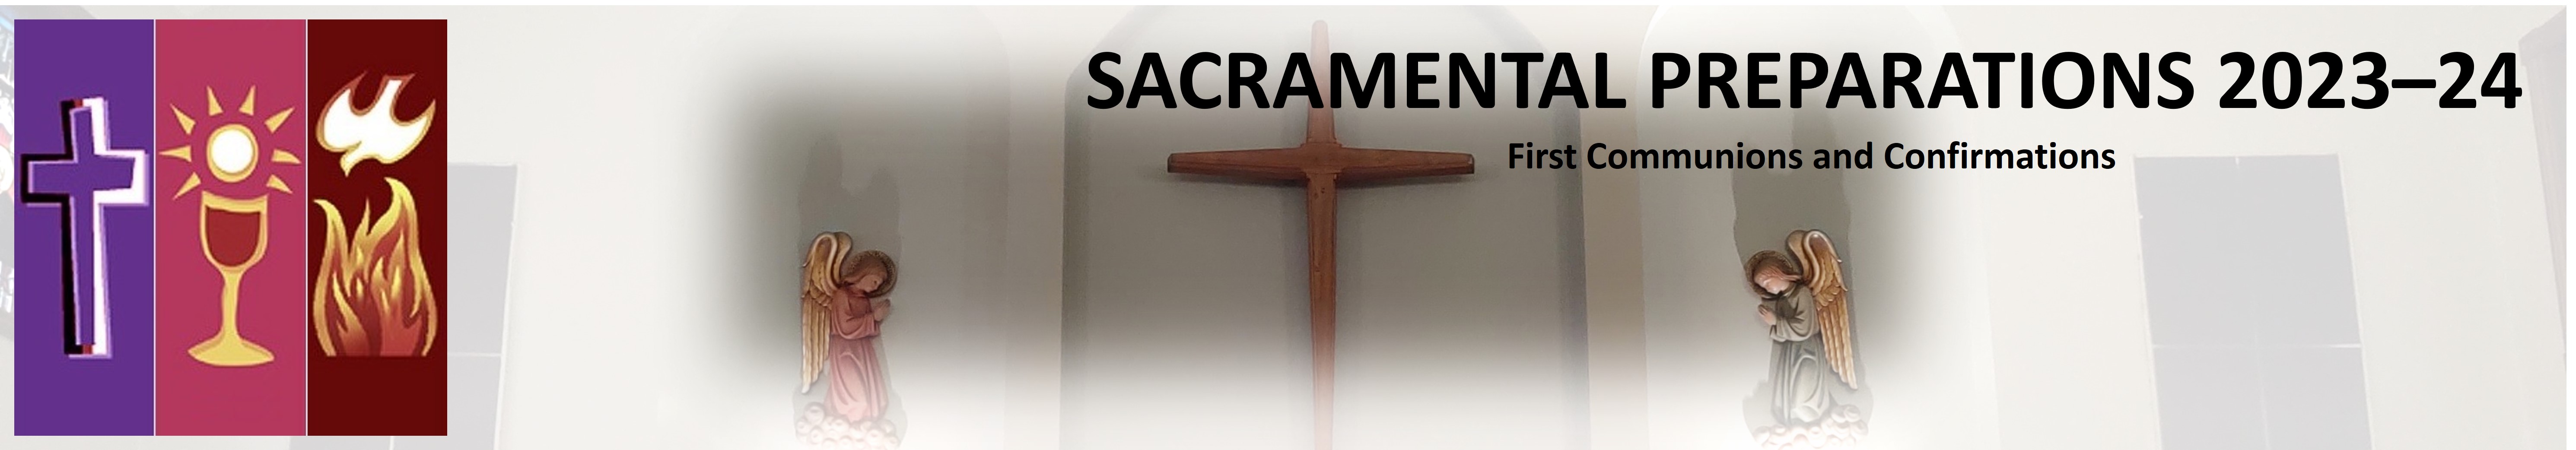 Header - Sacramental Preparations 2023-24